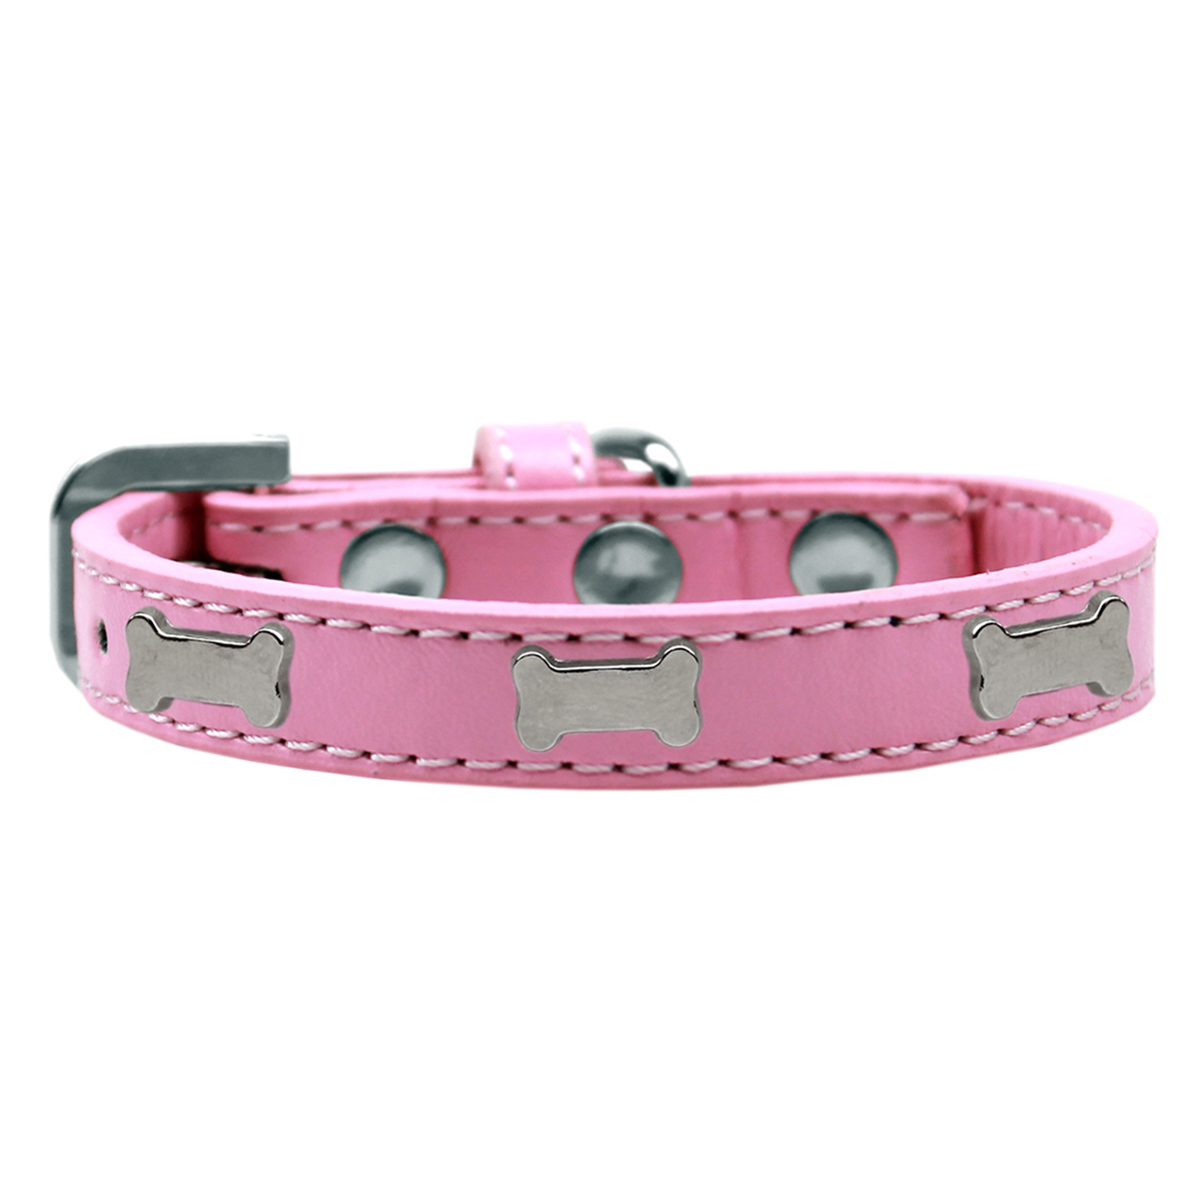 Silver Bone Widget Dog Collar, Light Pink - Size 16